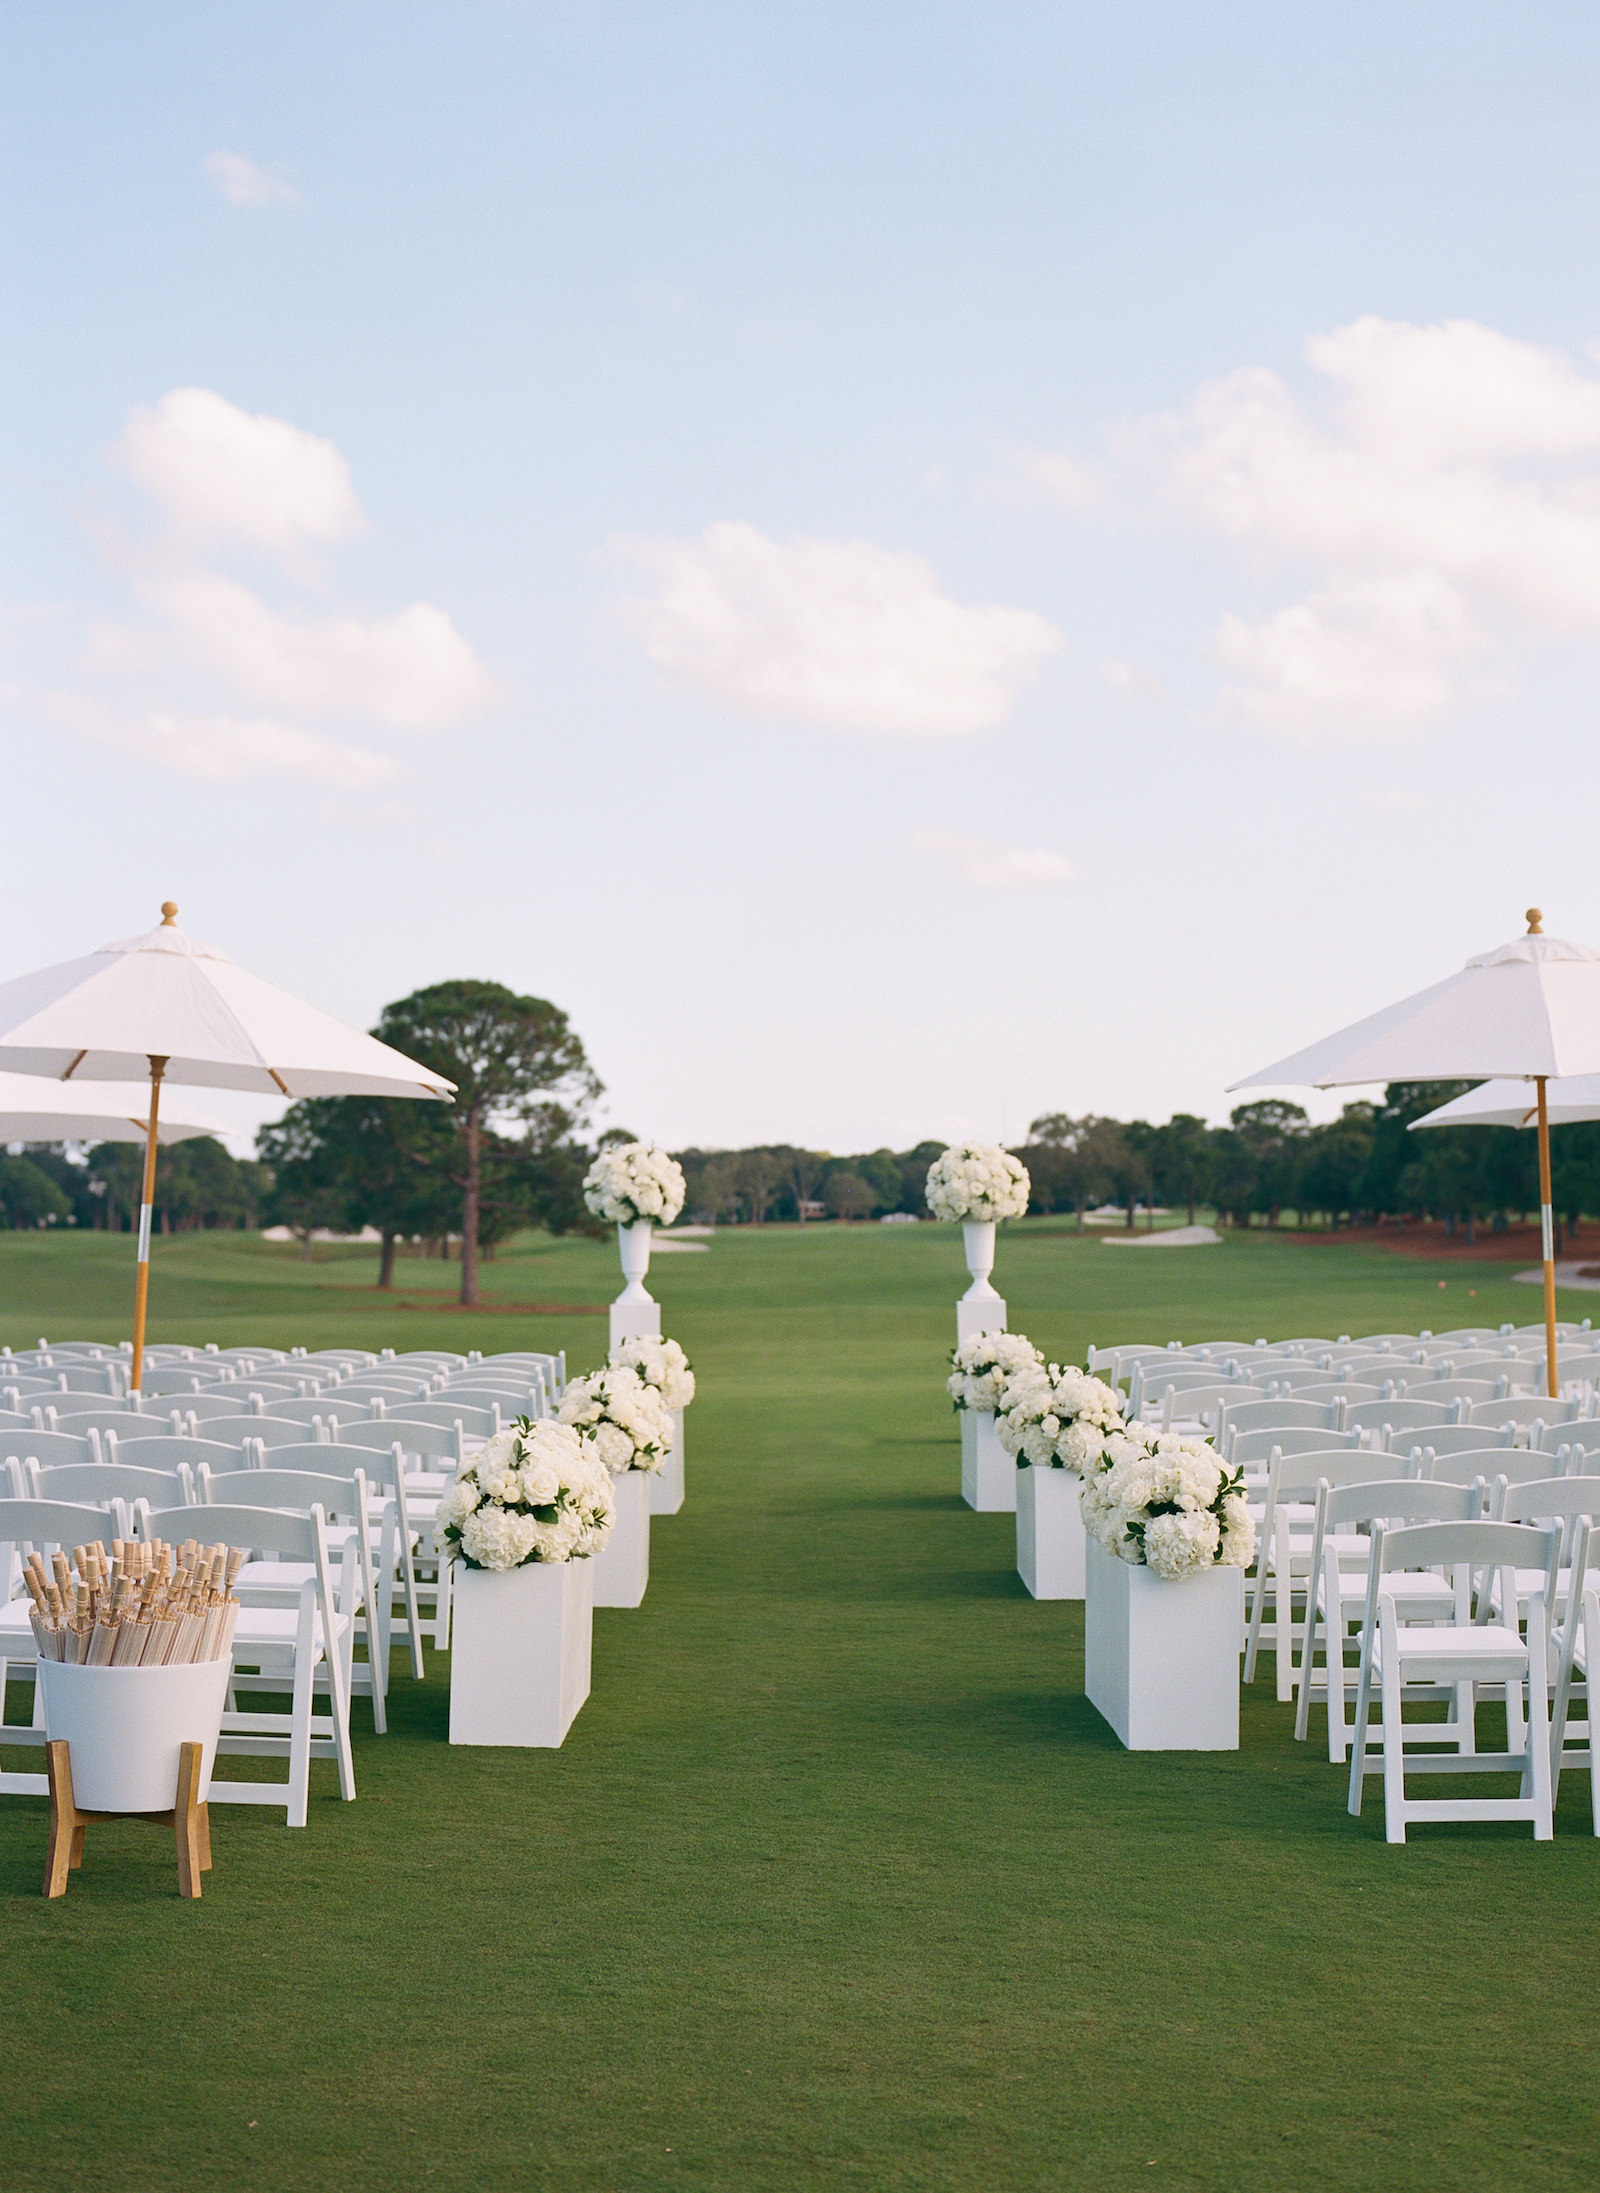 Luxurious Formal Outdoor All White Wedding Ceremony Decor on Golf Course, White Umbrellas | Tampa Bay Wedding Venue Pelican Golf Club | Wedding Planner Parties A'la Carte | Wedding Rentals Gabro Event Services